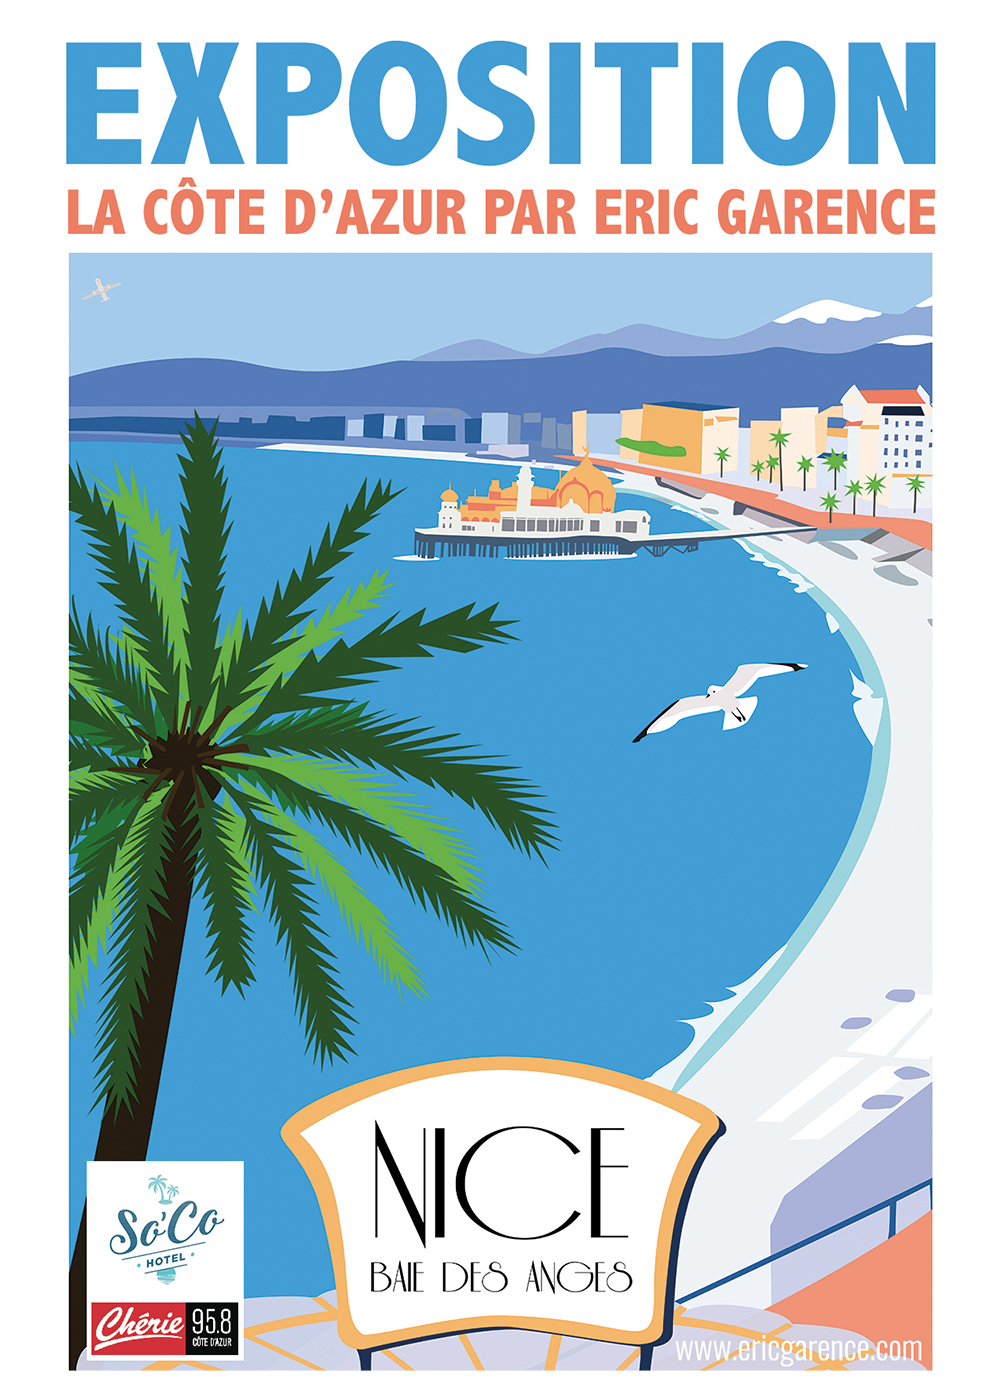 Hotel Soco Exposition Garence Eric Artiste niçois Affiche Art Casino Promenade Affiche Nice I love nice